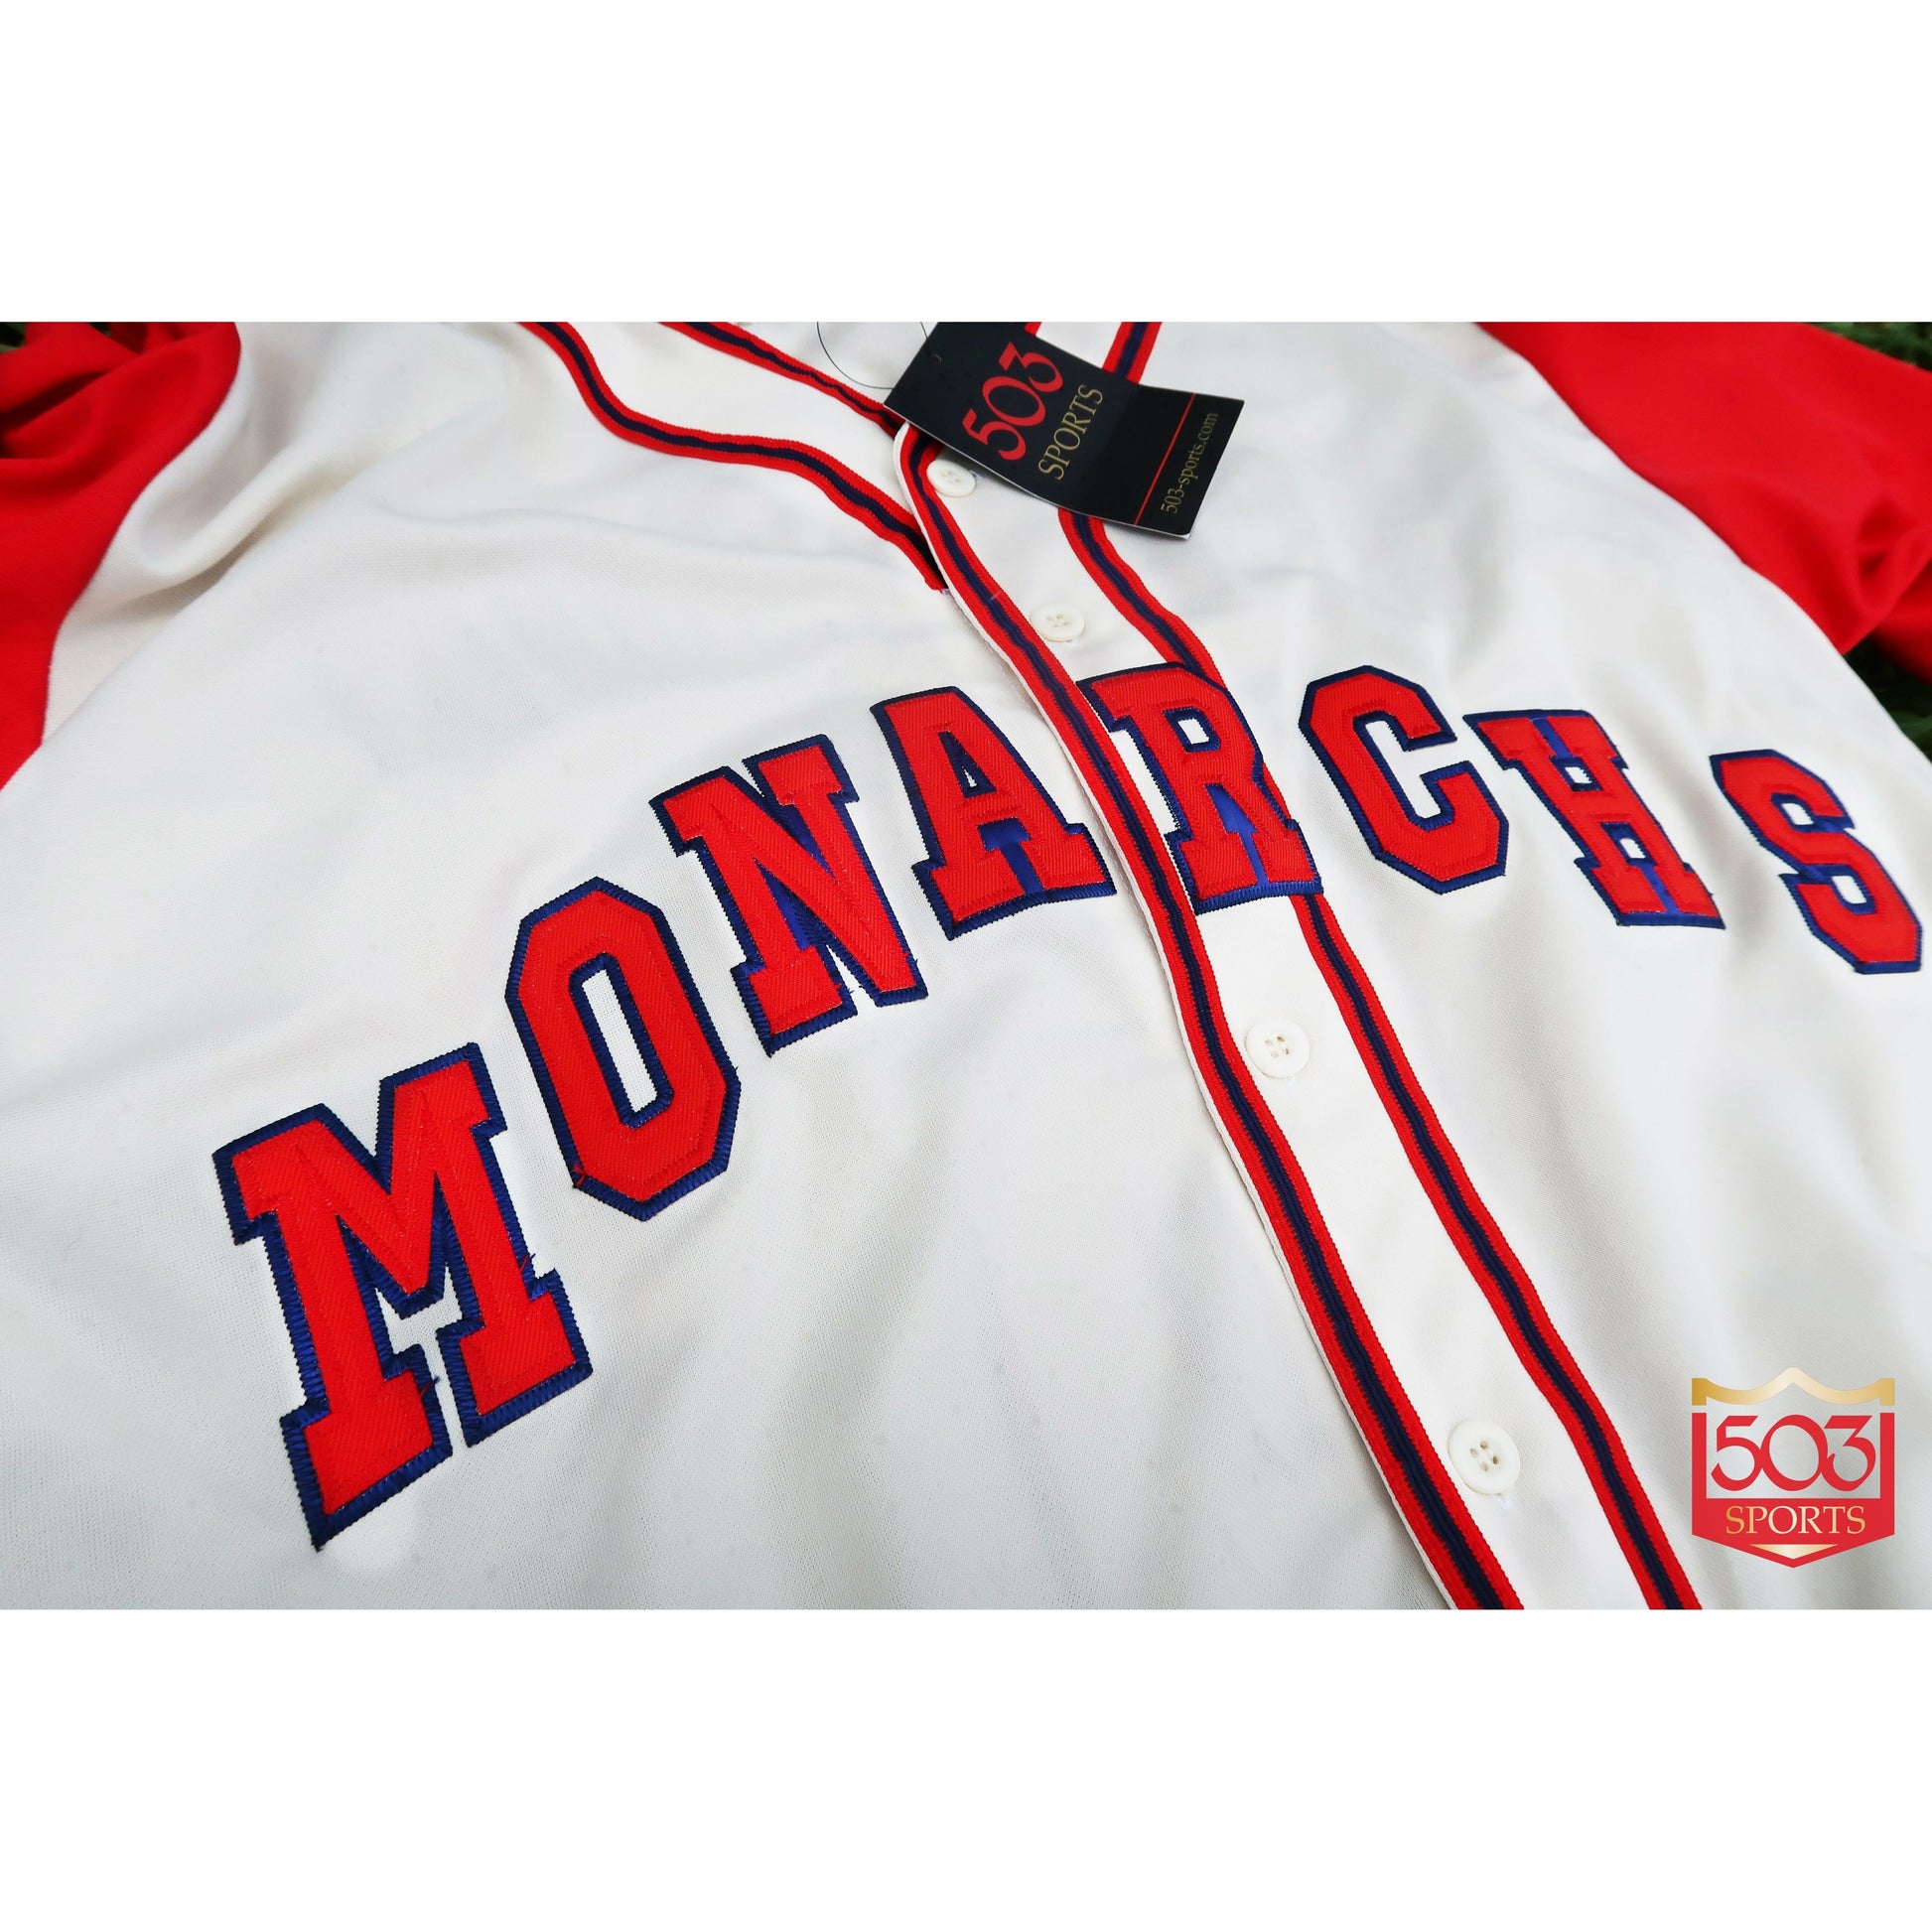 Kansas City Monarchs Jerseys – Kansas City Monarchs Baseball